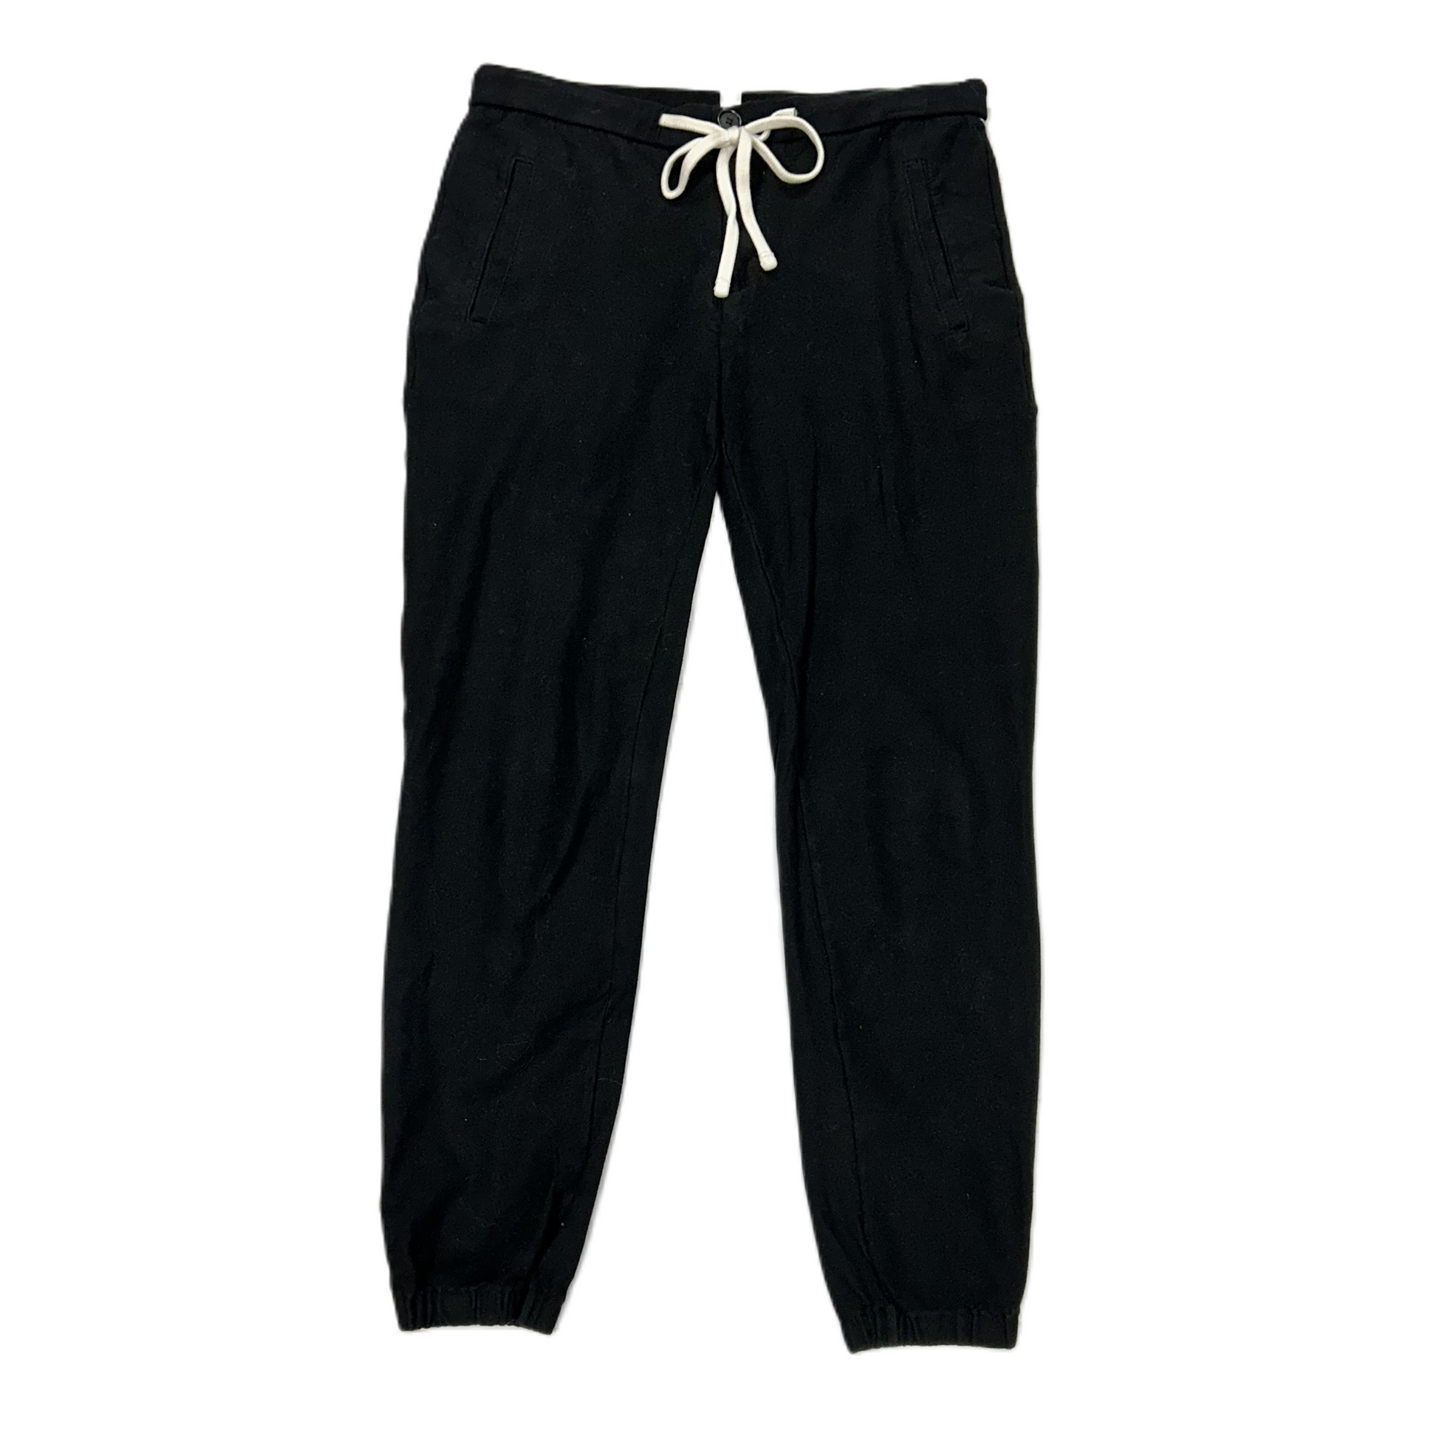 Black Pants Designer By James Perse, Size: S